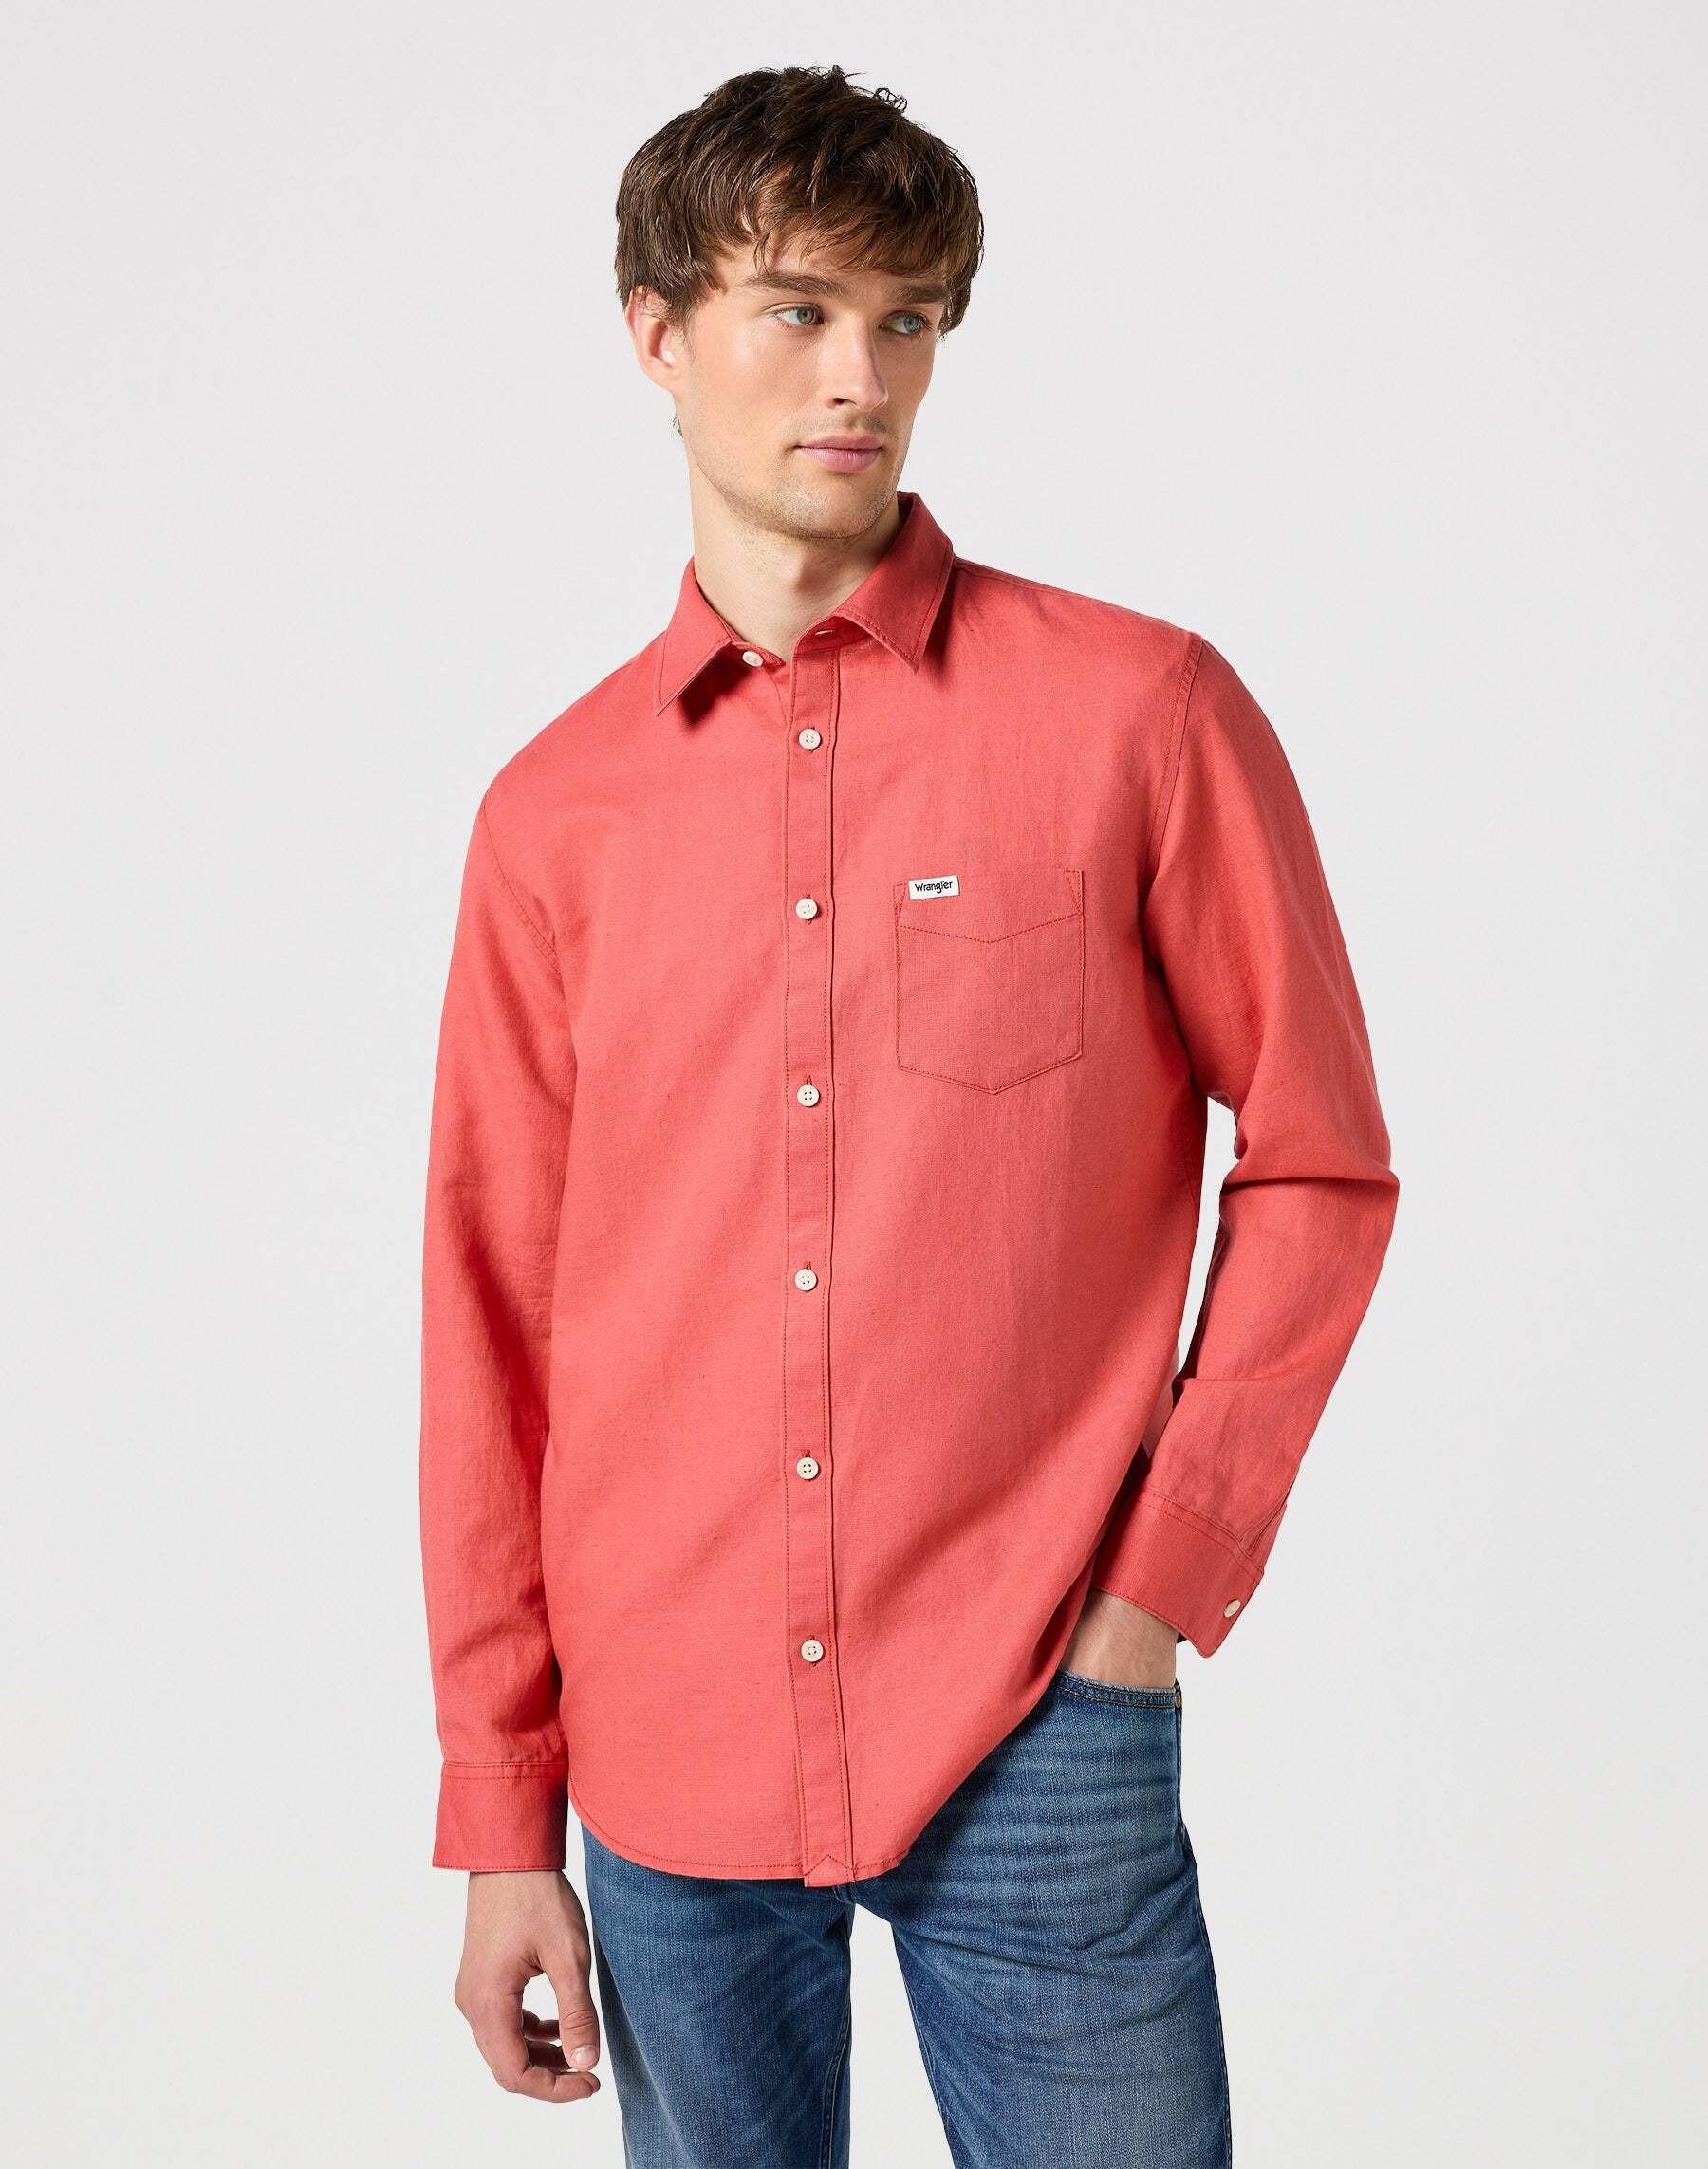 Hemden One Pocket Shirt Herren Orange S von Wrangler